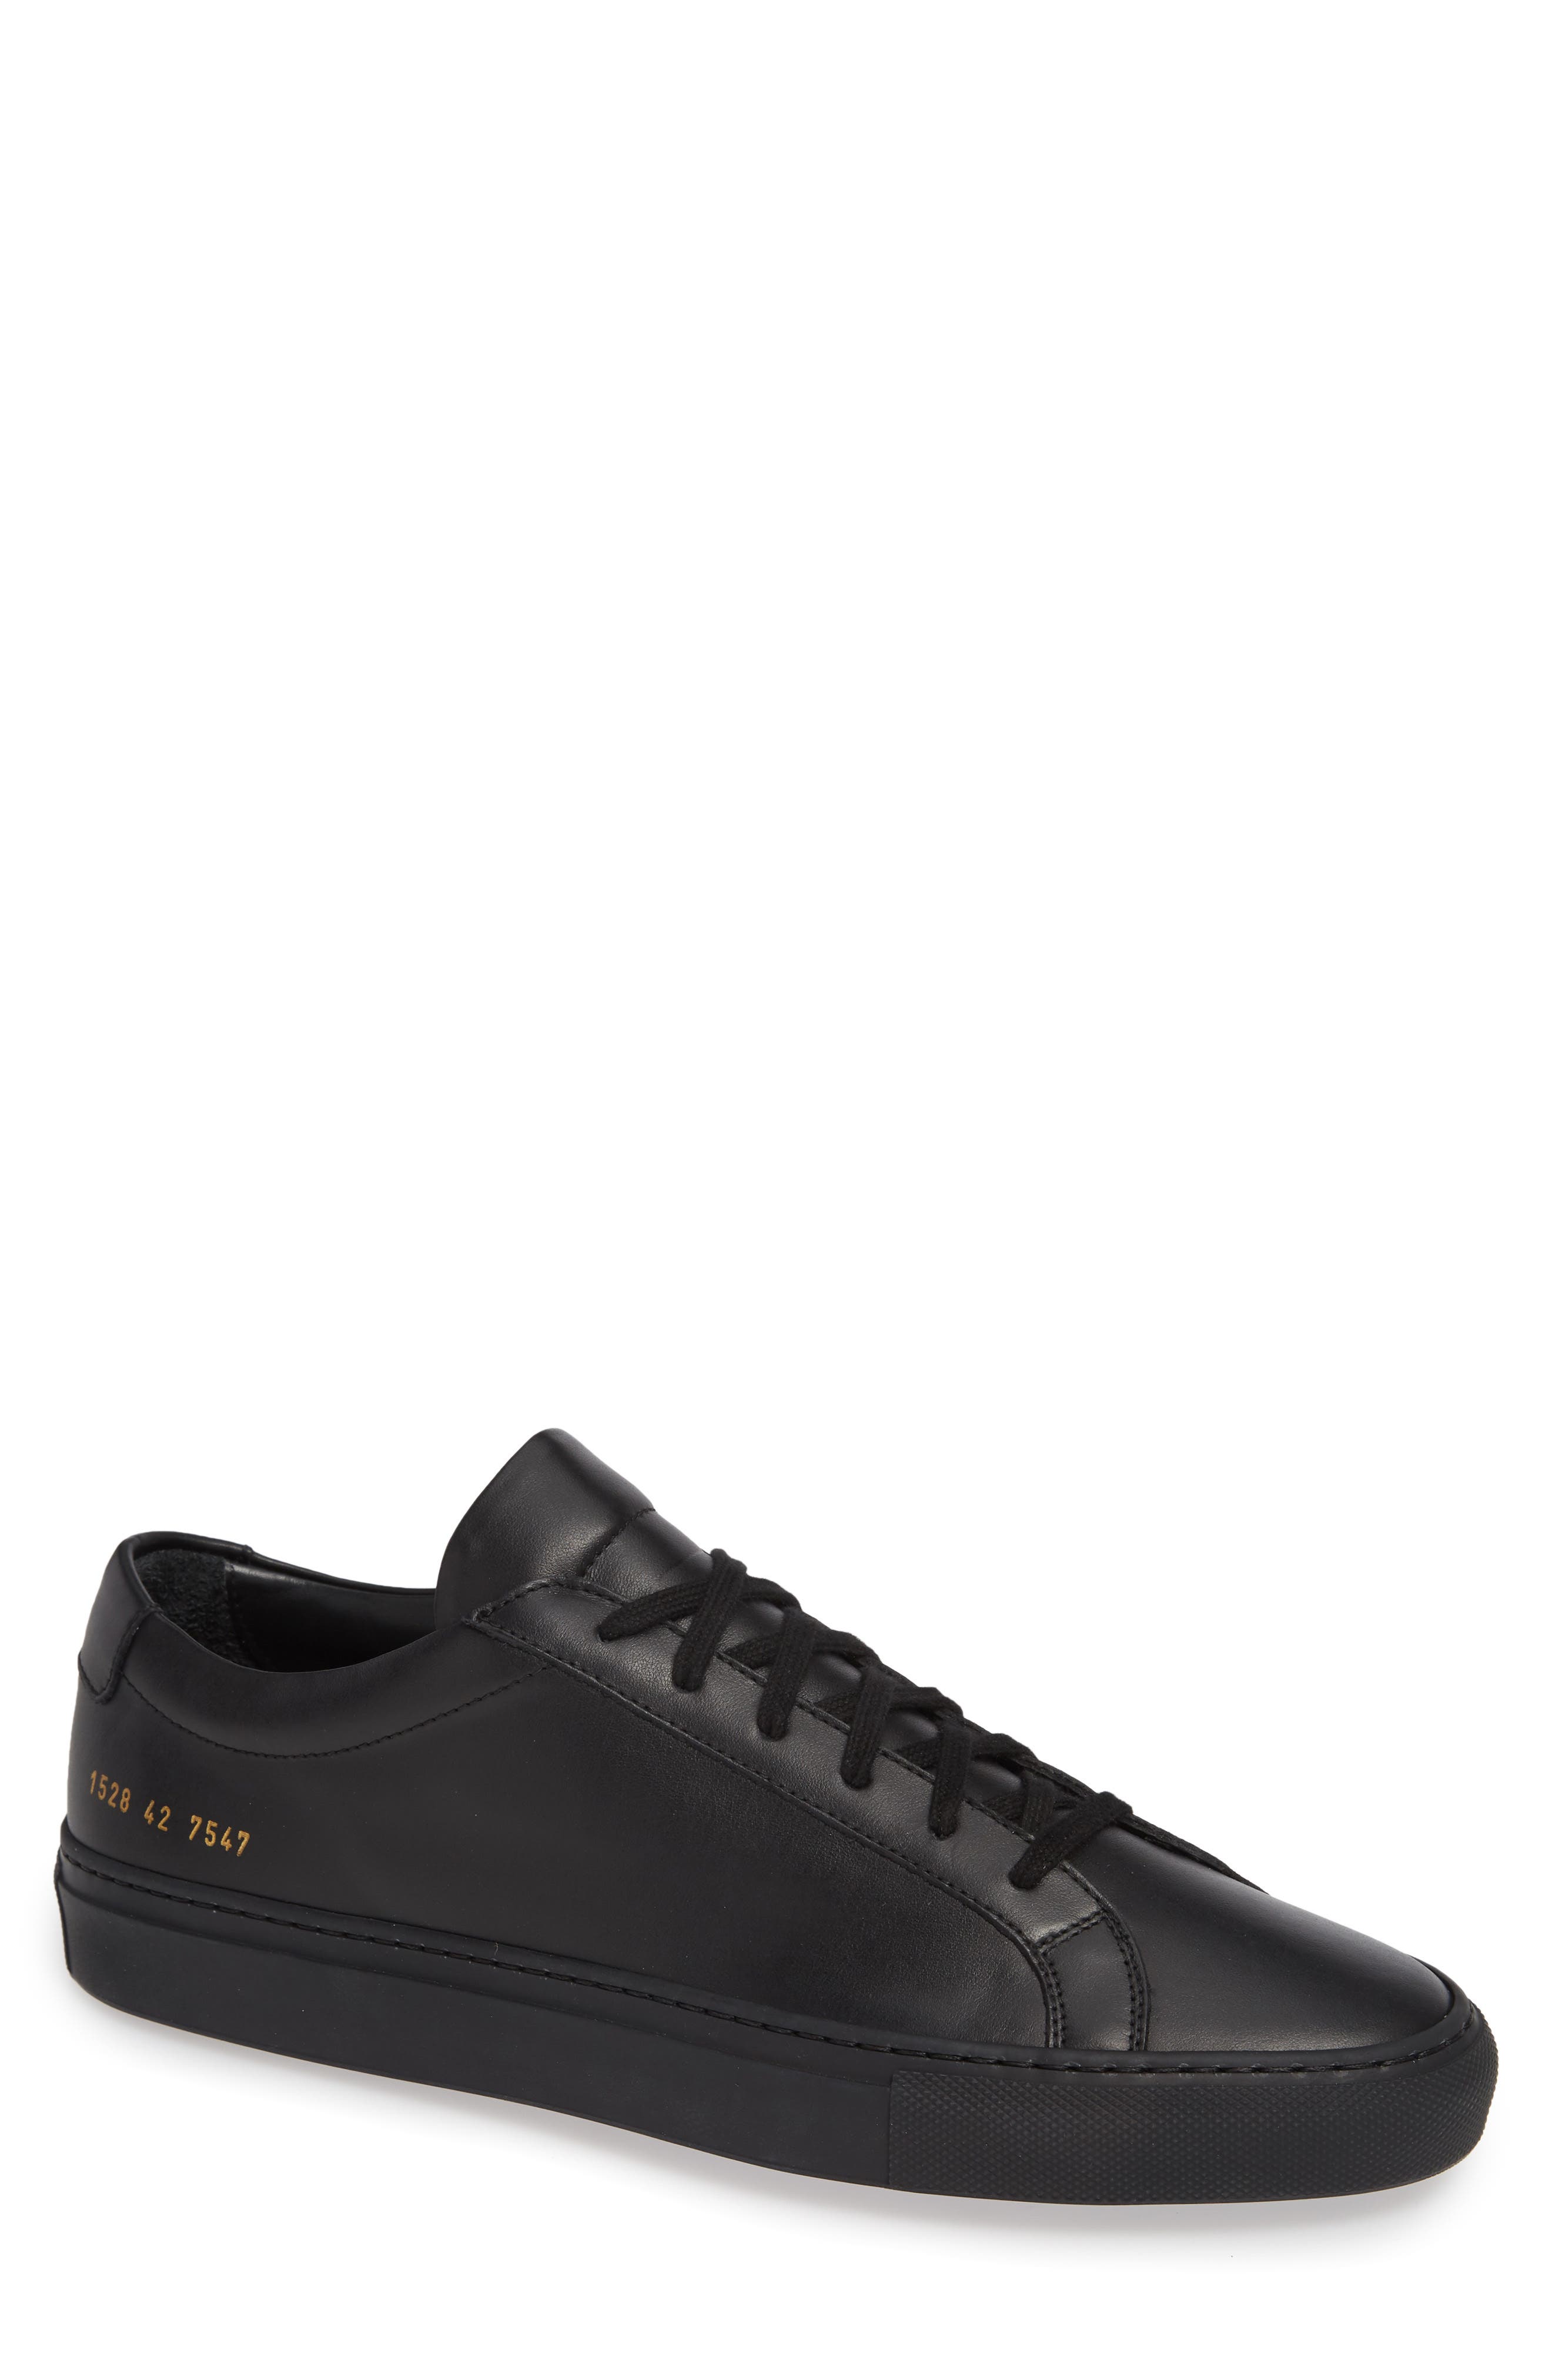 black sneaker dress shoes